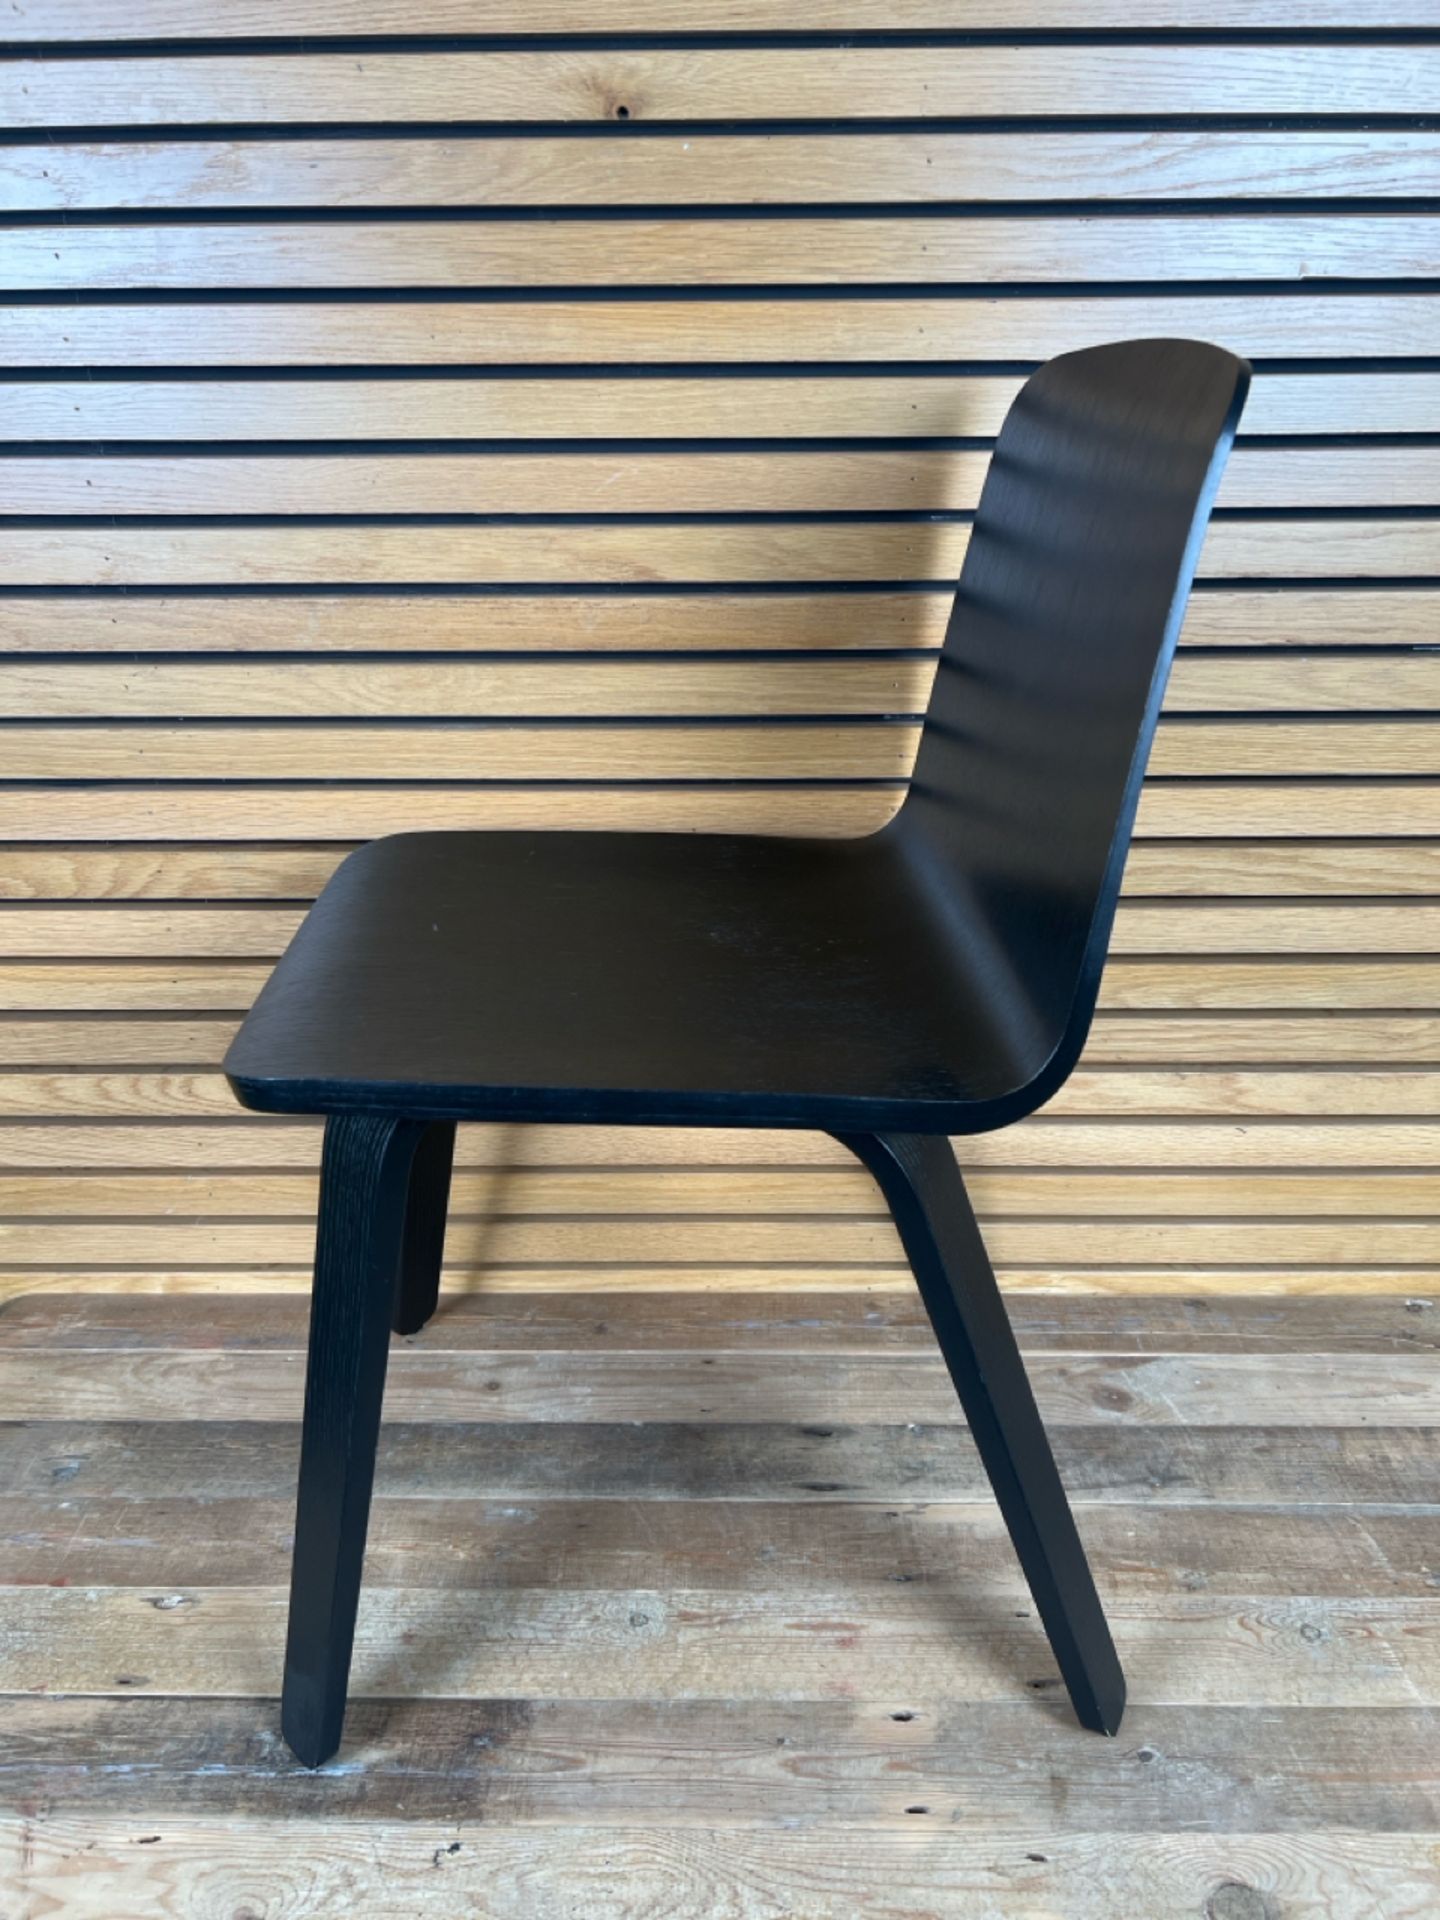 Normann Copenhagen Just Chair In Black - Image 2 of 3